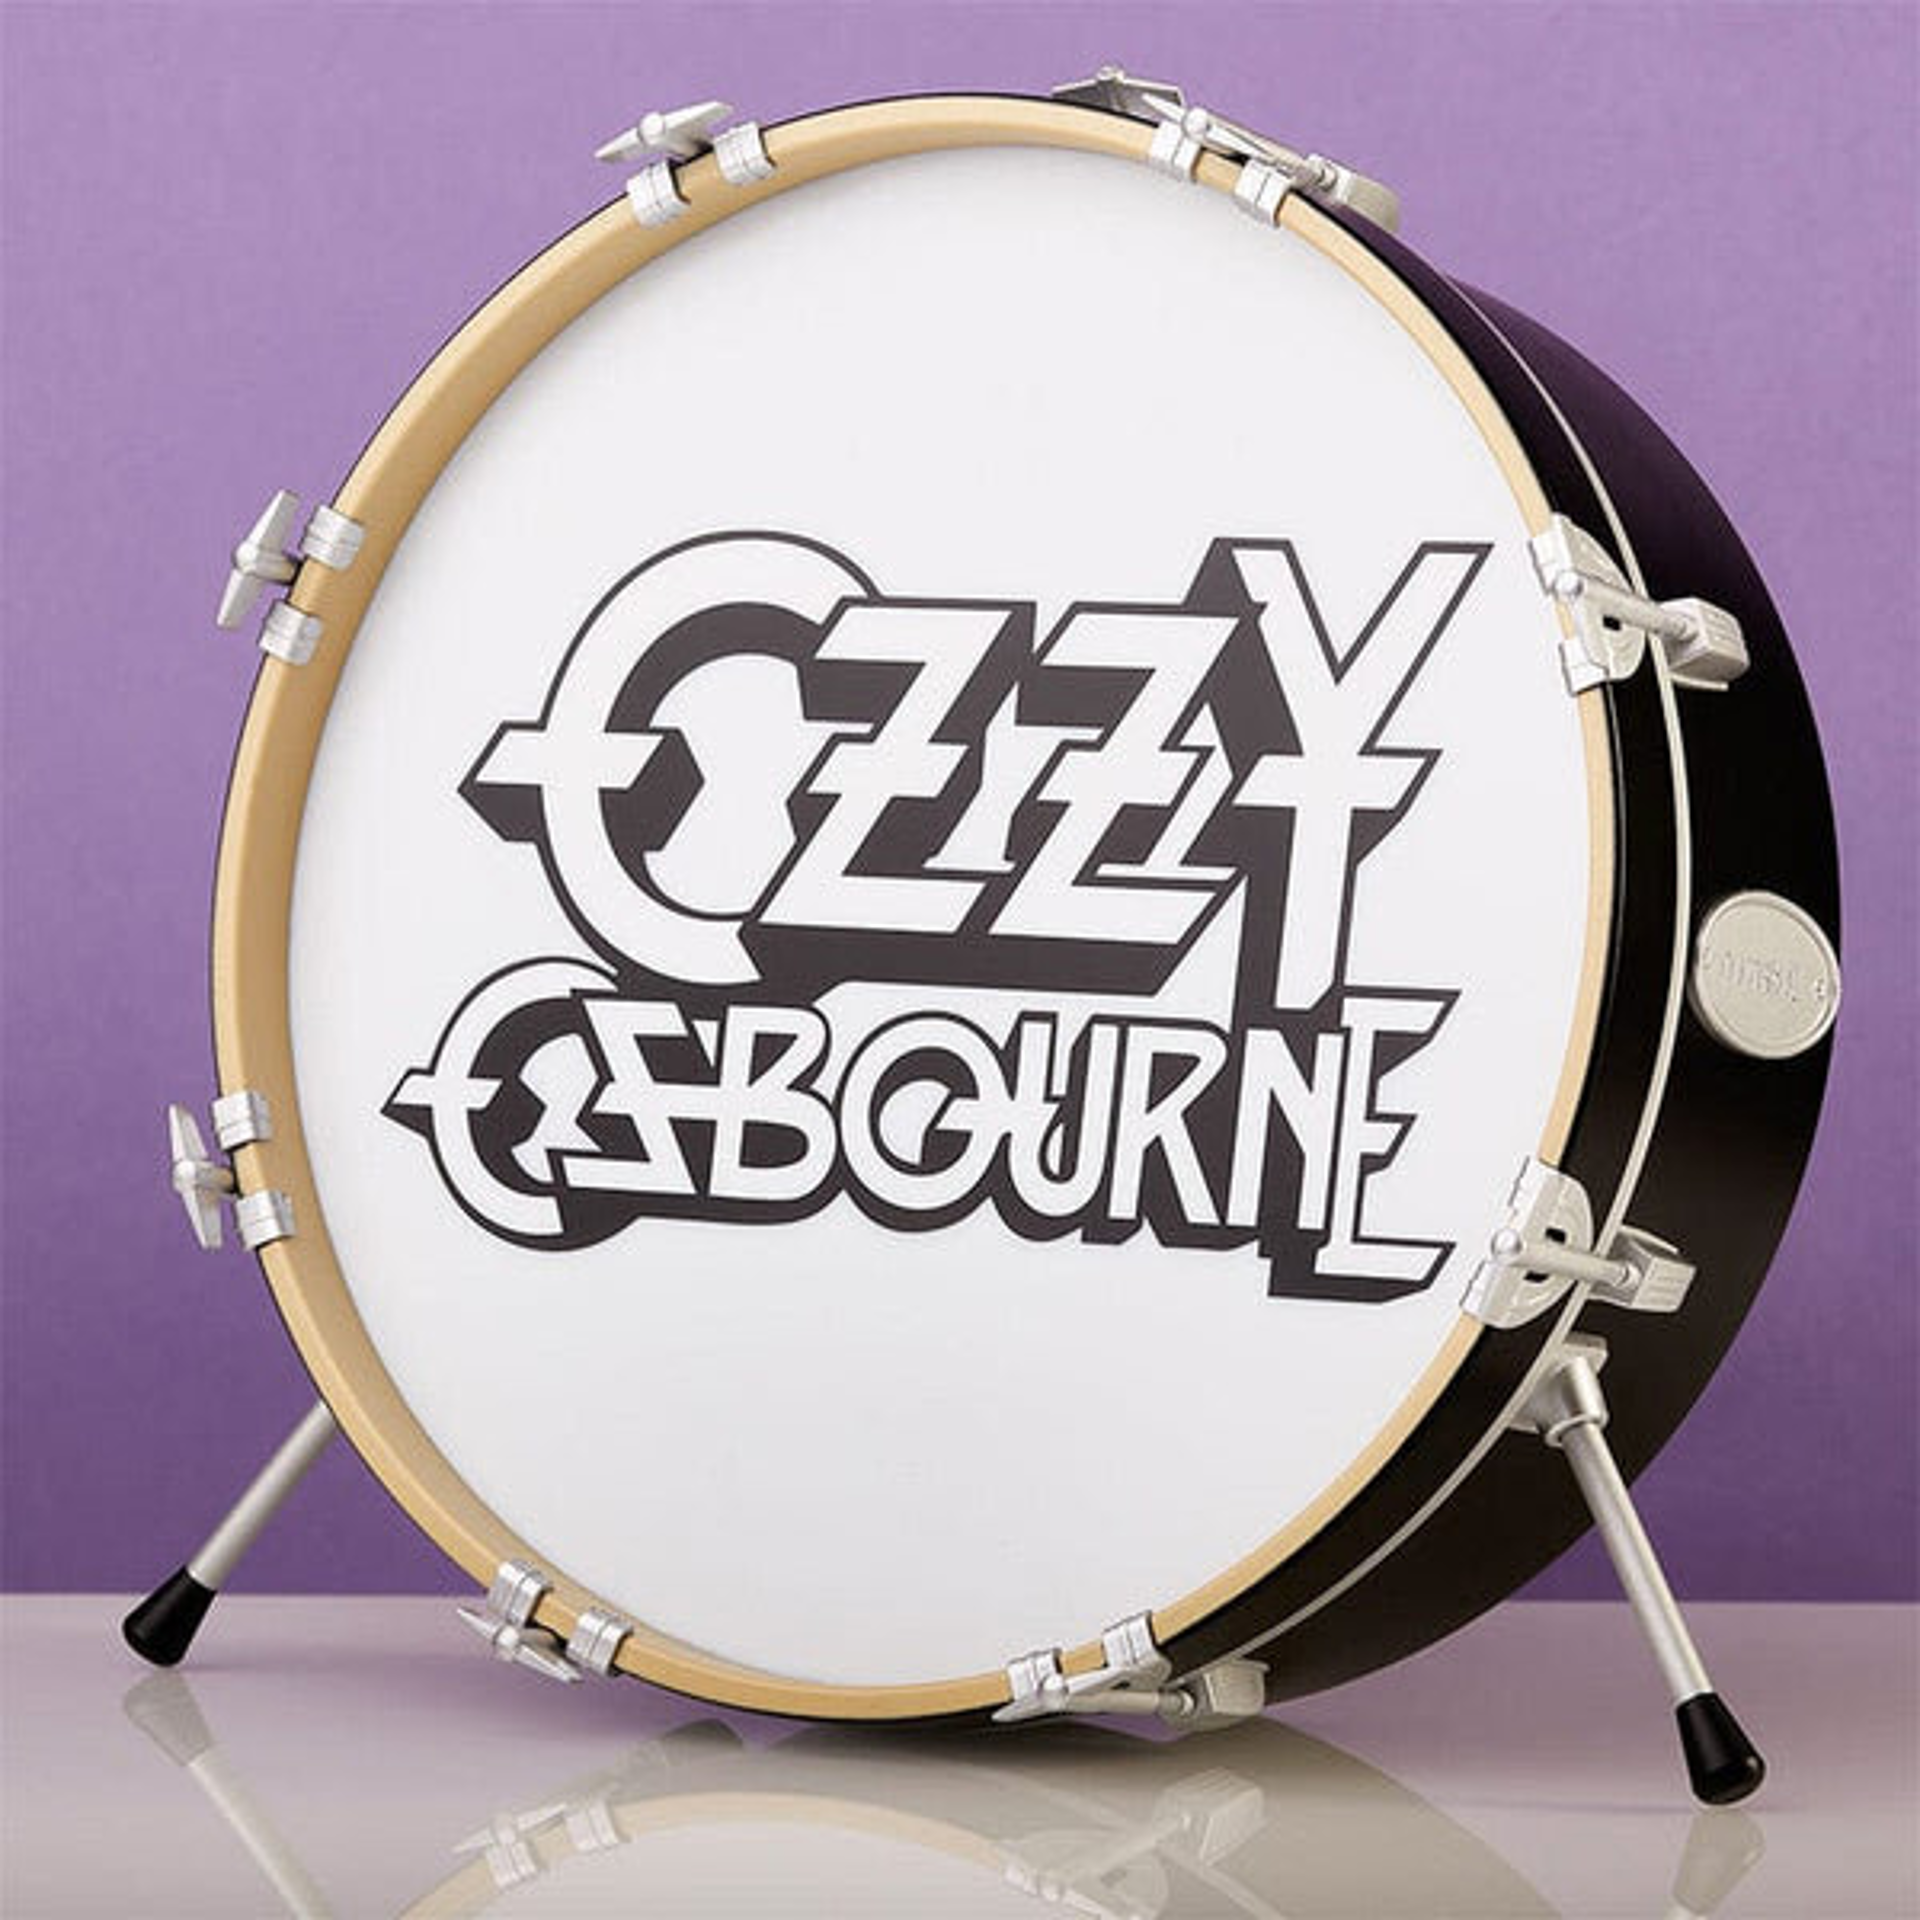 Ozzy Osbourne - Lampe en forme de tambour avec logo du groupe